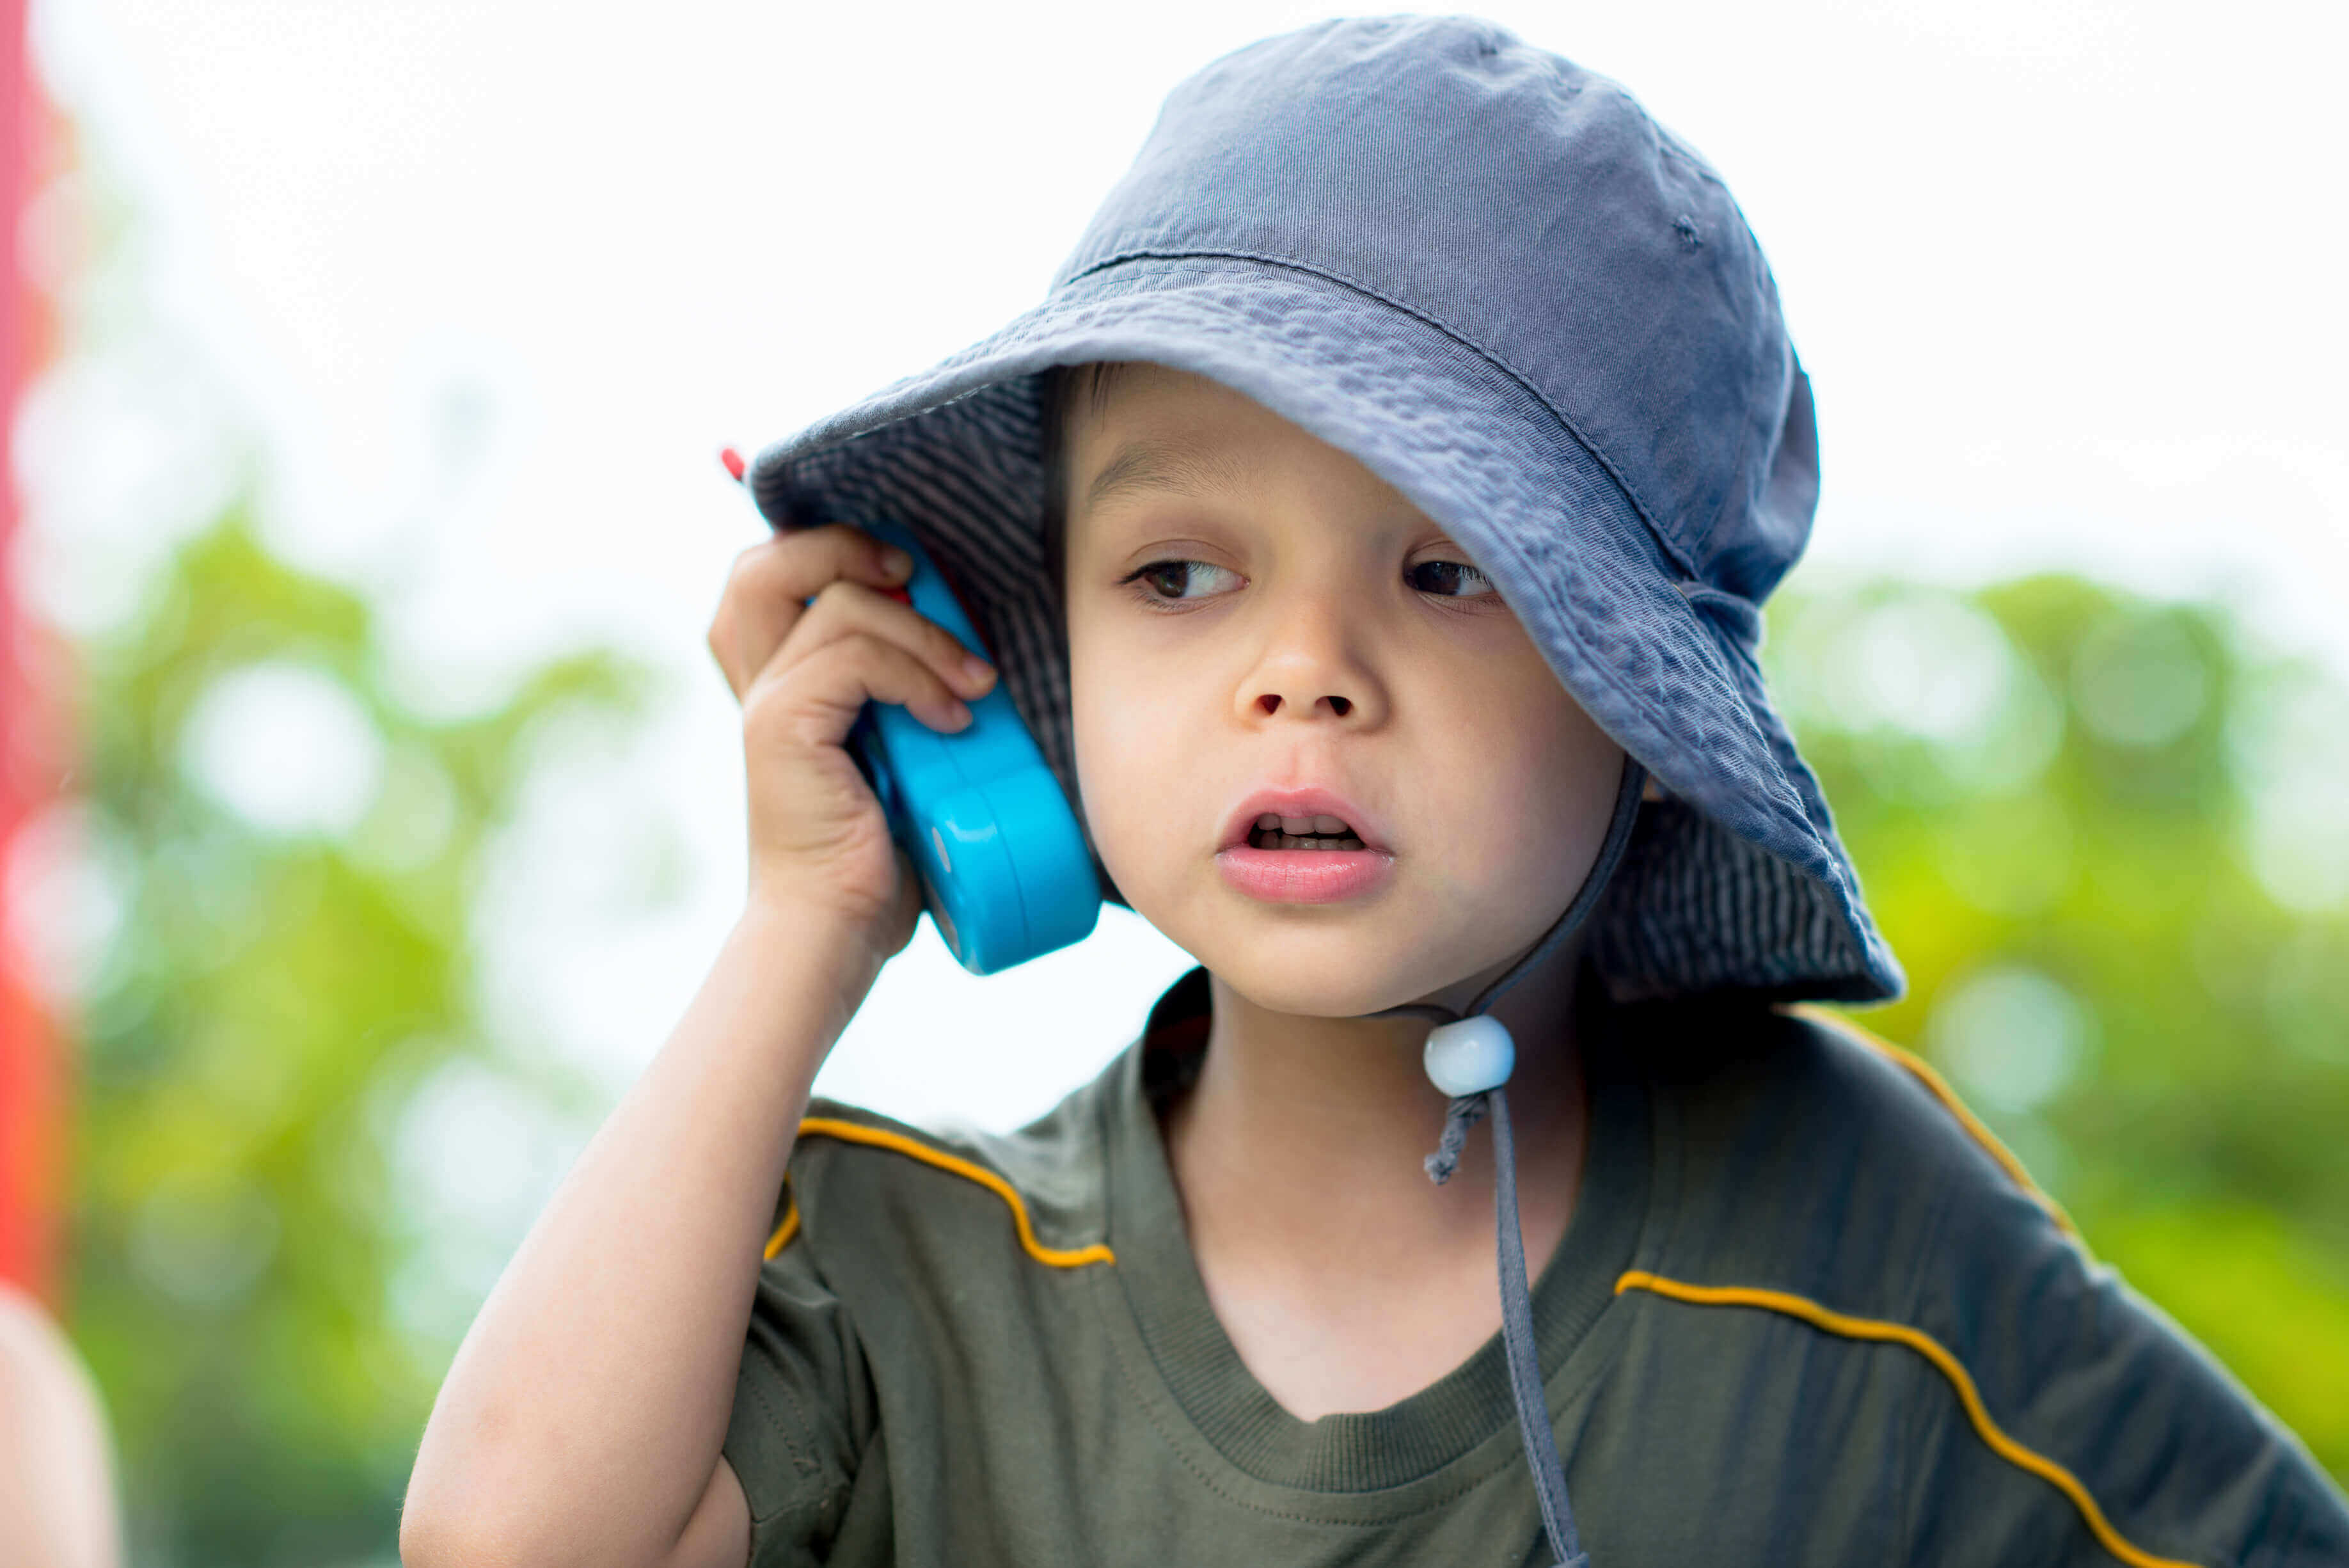 Child with toy walkie talkie